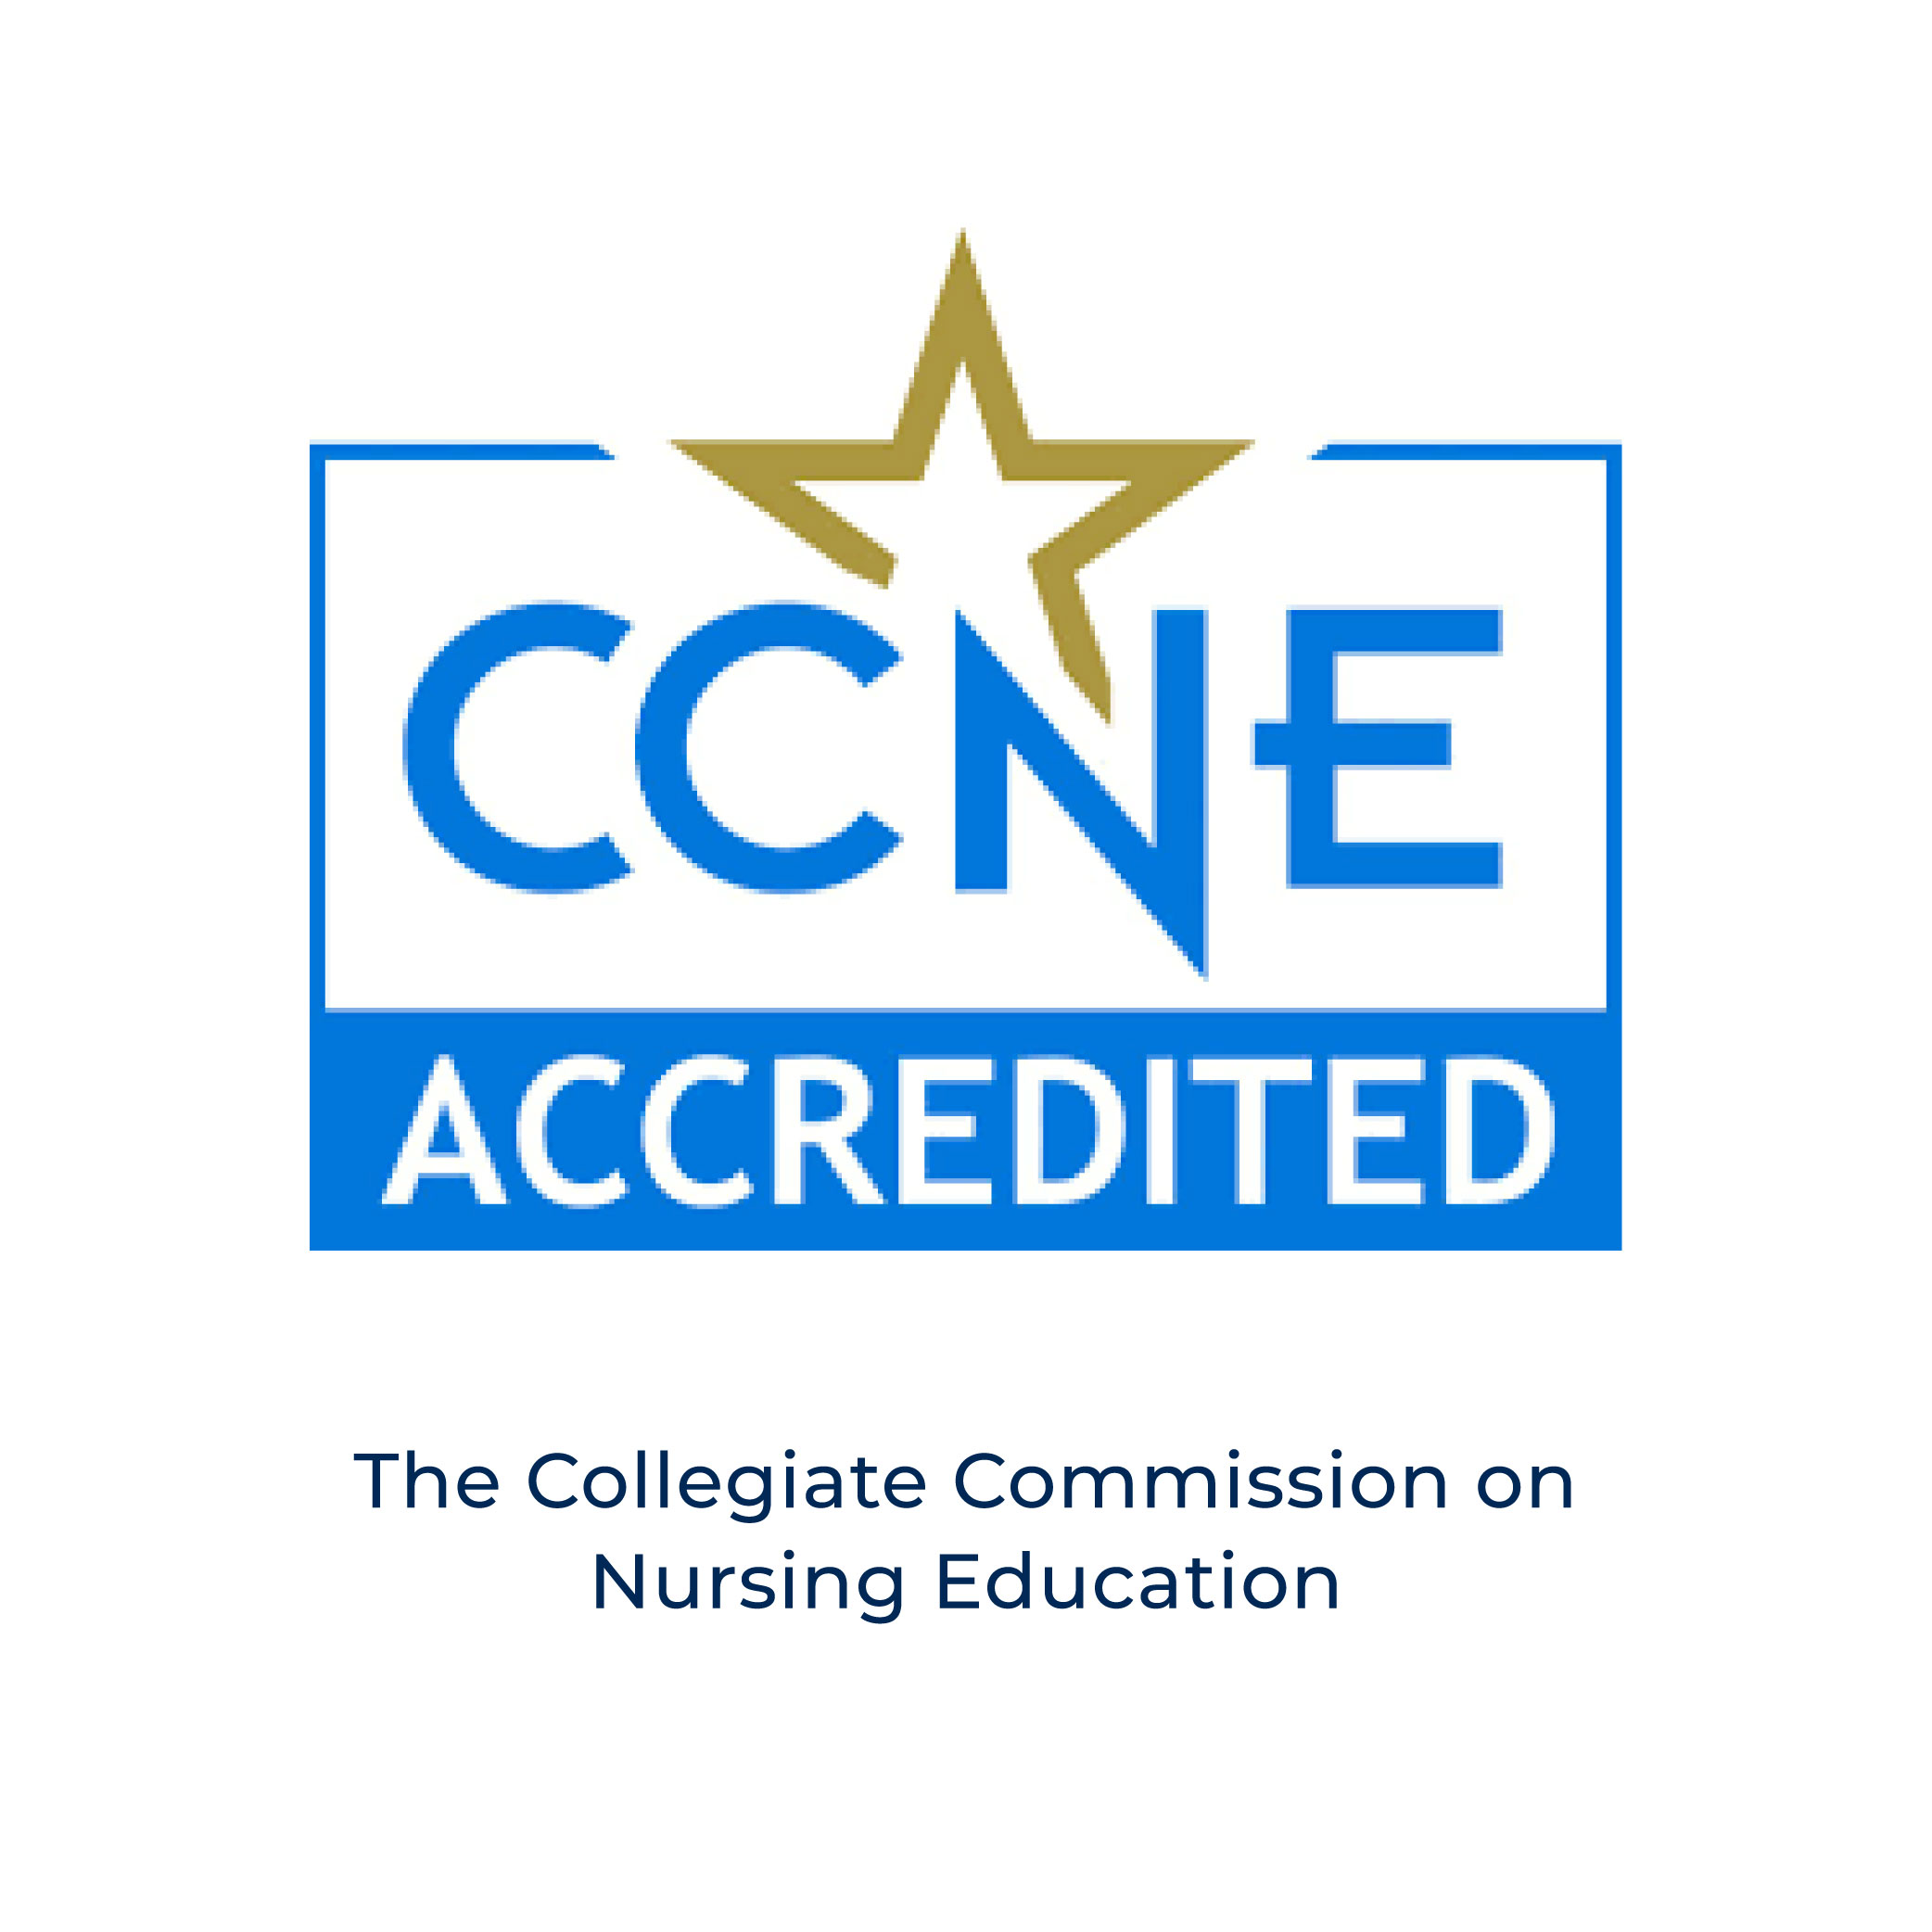 The Collegiate Commission on Nursing Education